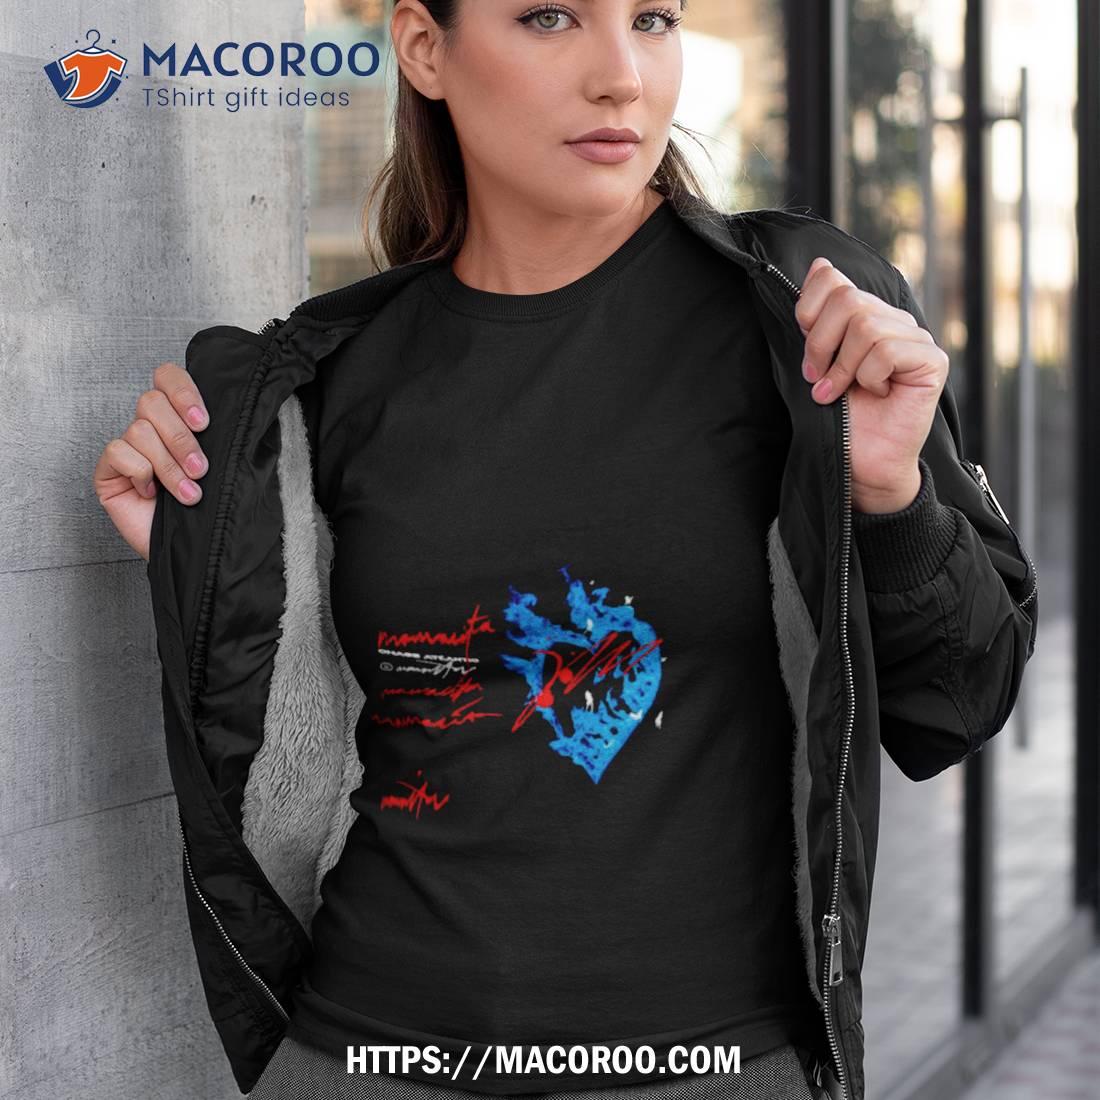 Macoroo Shirt on LinkedIn: Vintage American Papa Football Shirt